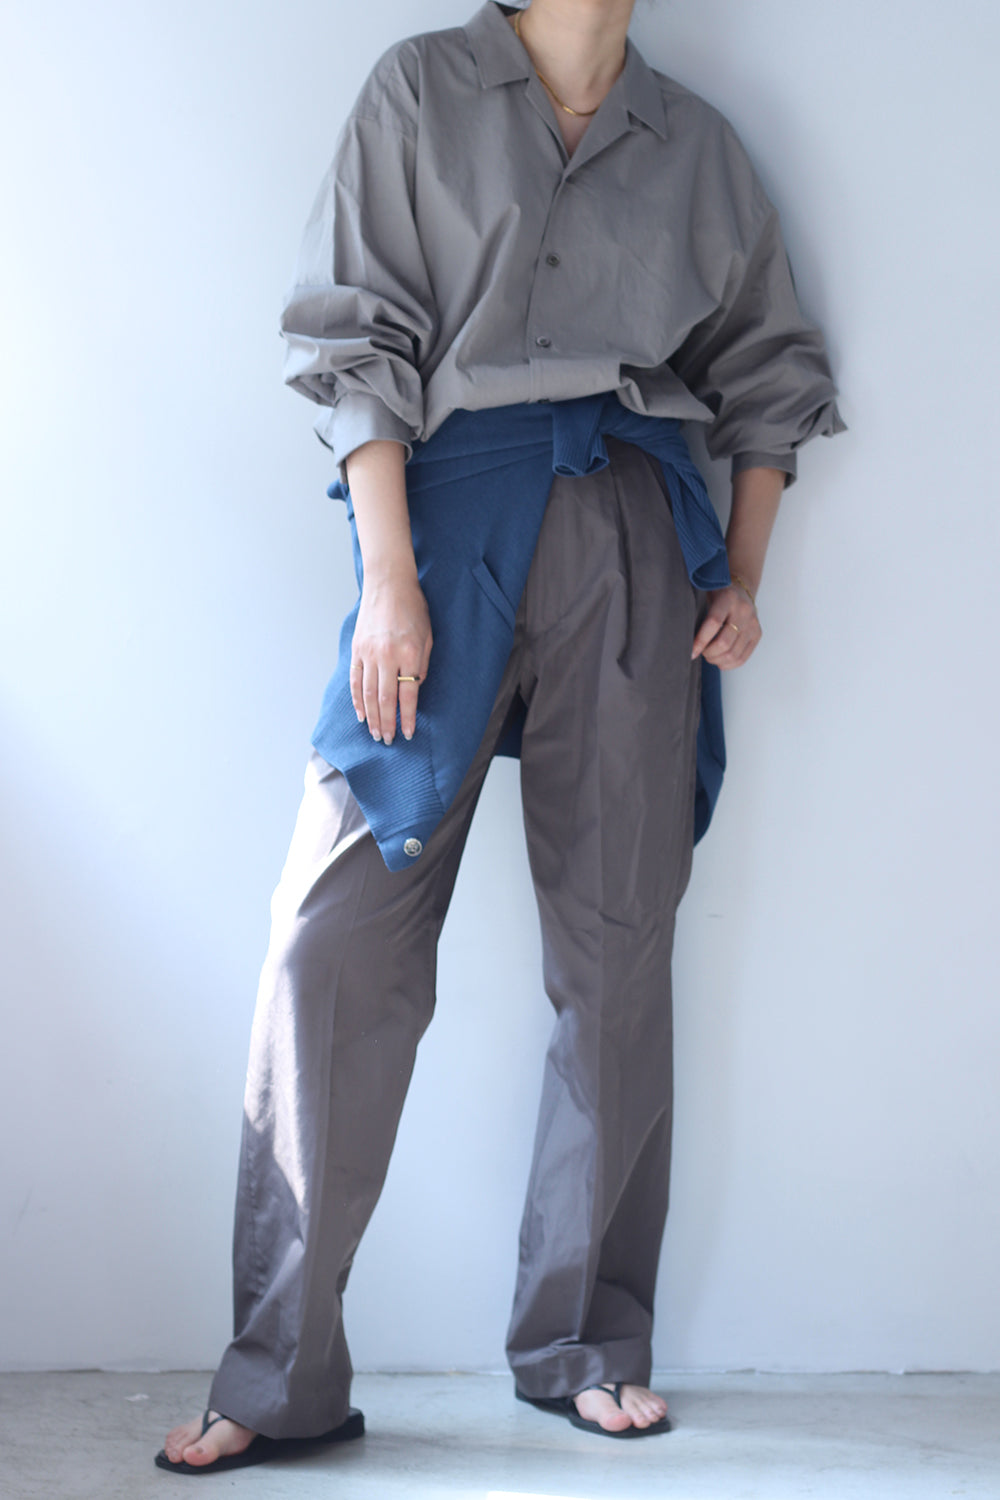 JUN MIKAMI "open collar shirt" (gray)